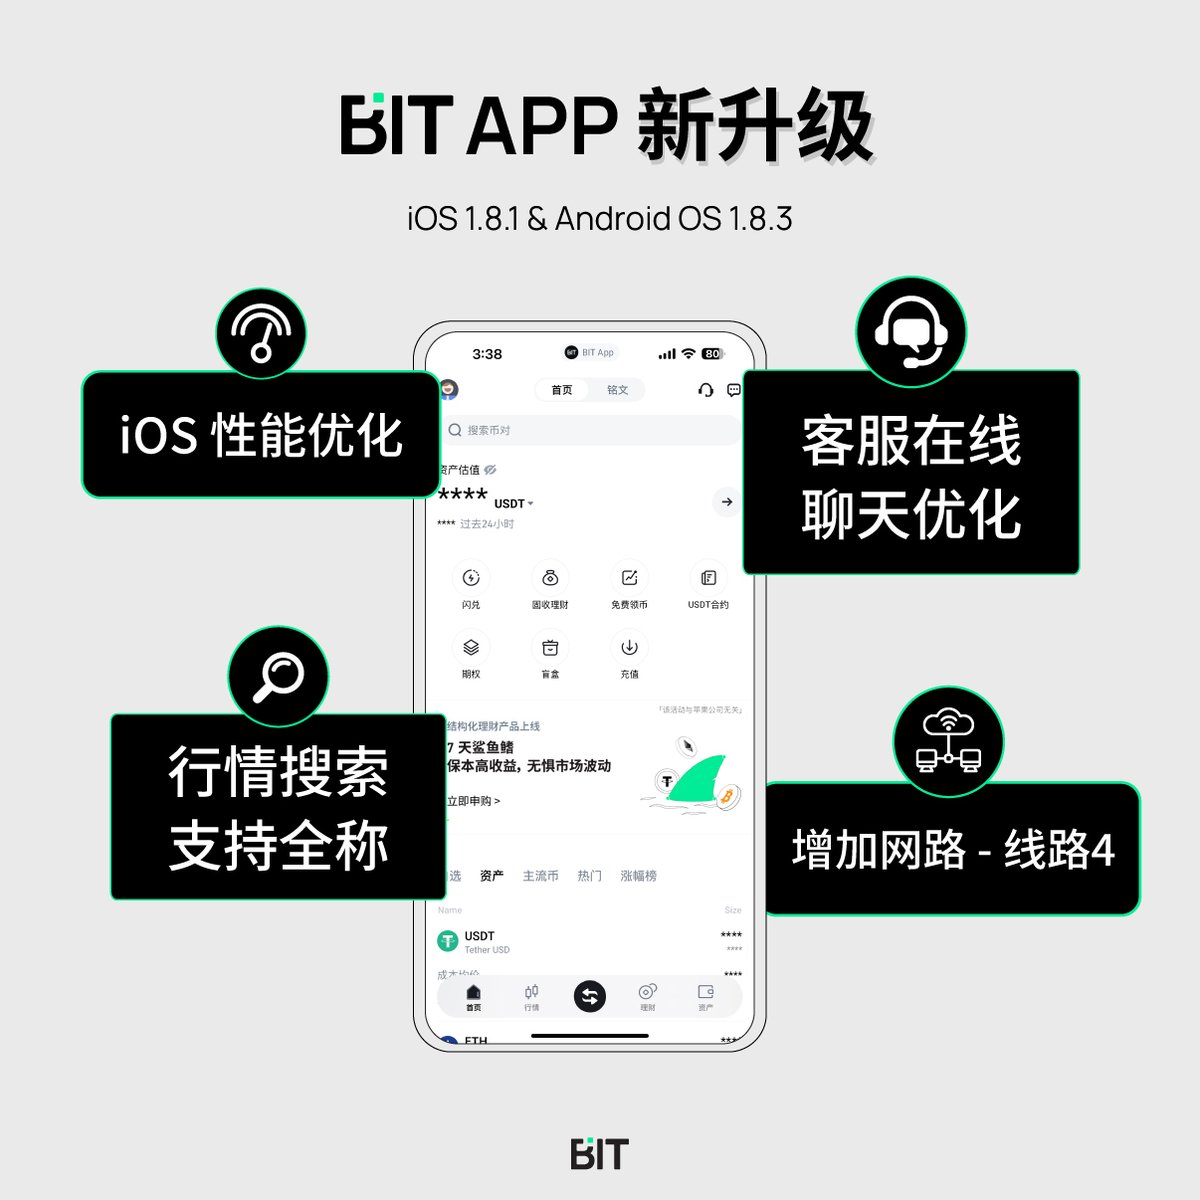 📲 BIT App 新升级 - iOS 1.8.1 & Android OS 1.8.3 🚀 1️⃣ 客服在线聊天优化 2️⃣ 行情支持全称搜索 3️⃣ iOS 性能优化 4️⃣ 增加网络线路 4 🤩 立即体验升级 BIT App 📲 BIT.com/Download